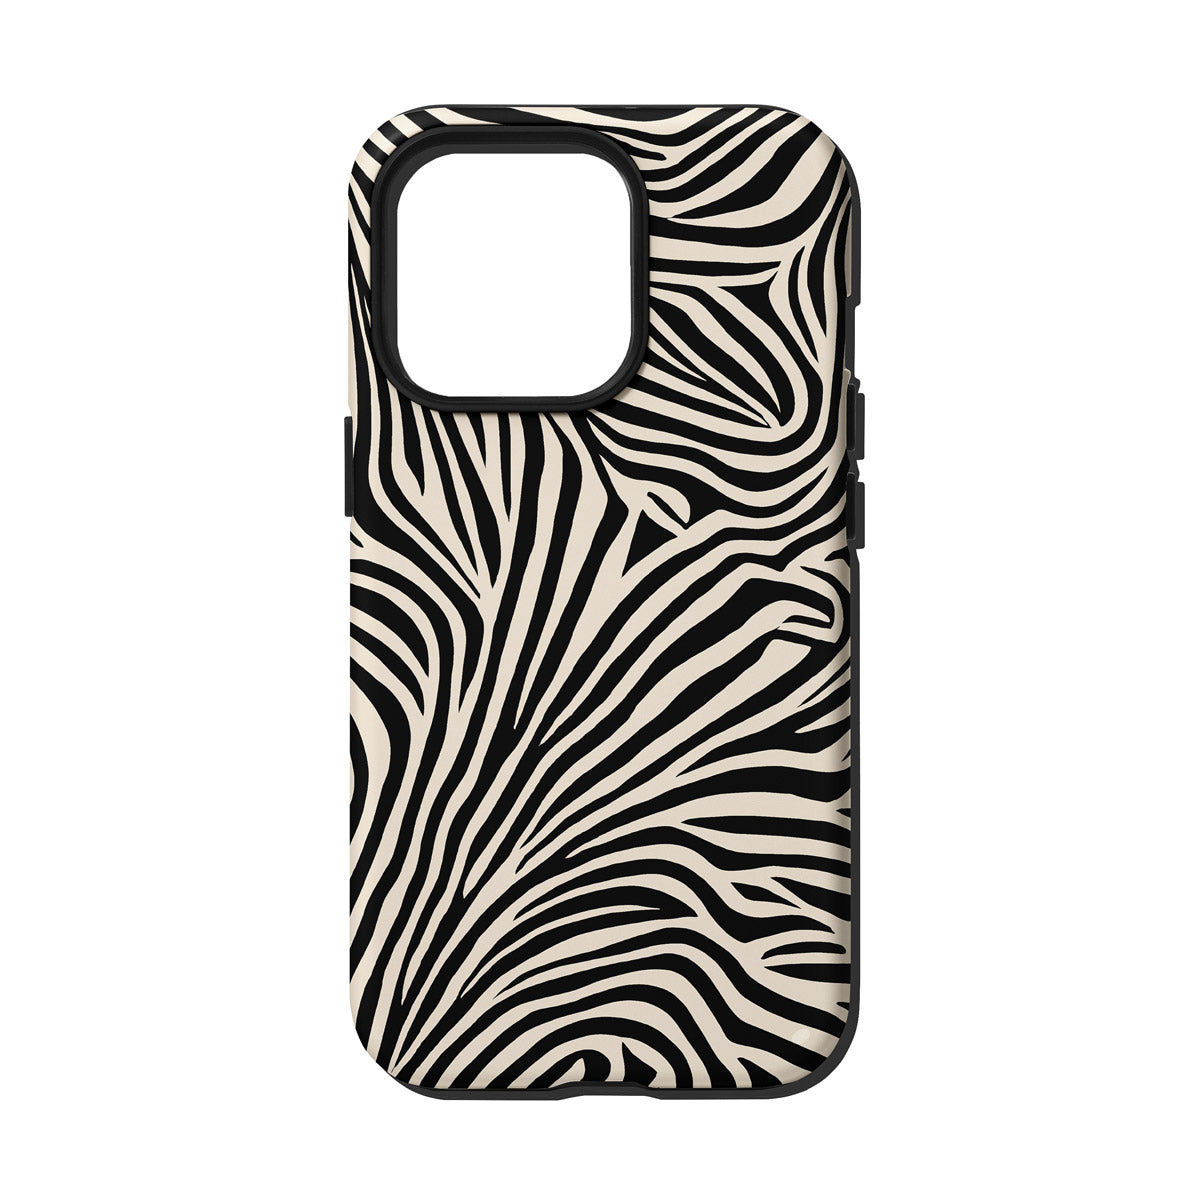 Zebra phone case